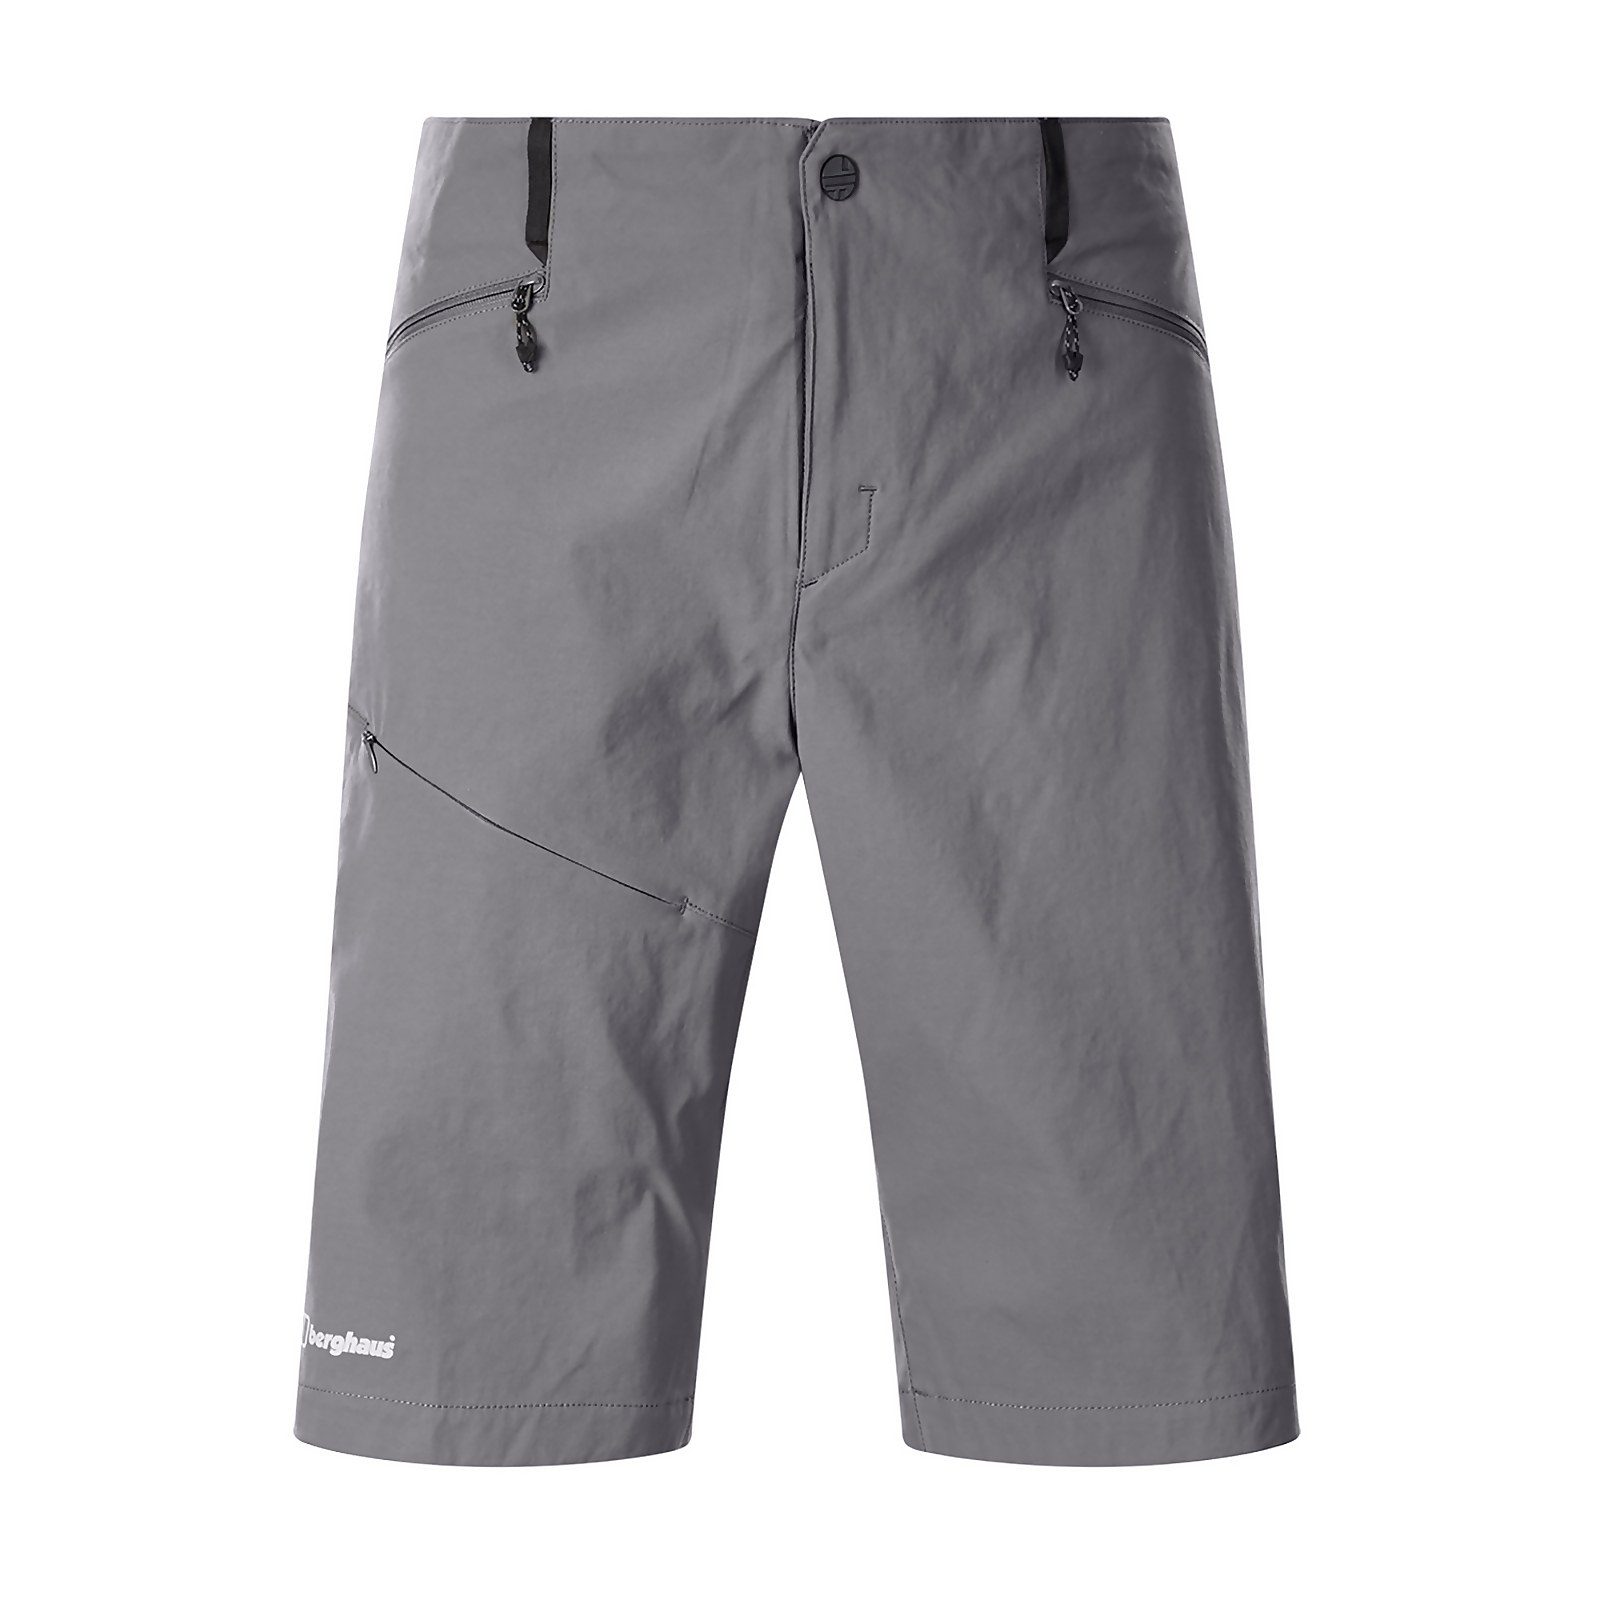 Berghaus Mens Baggy Light Shorts - Grey - 38